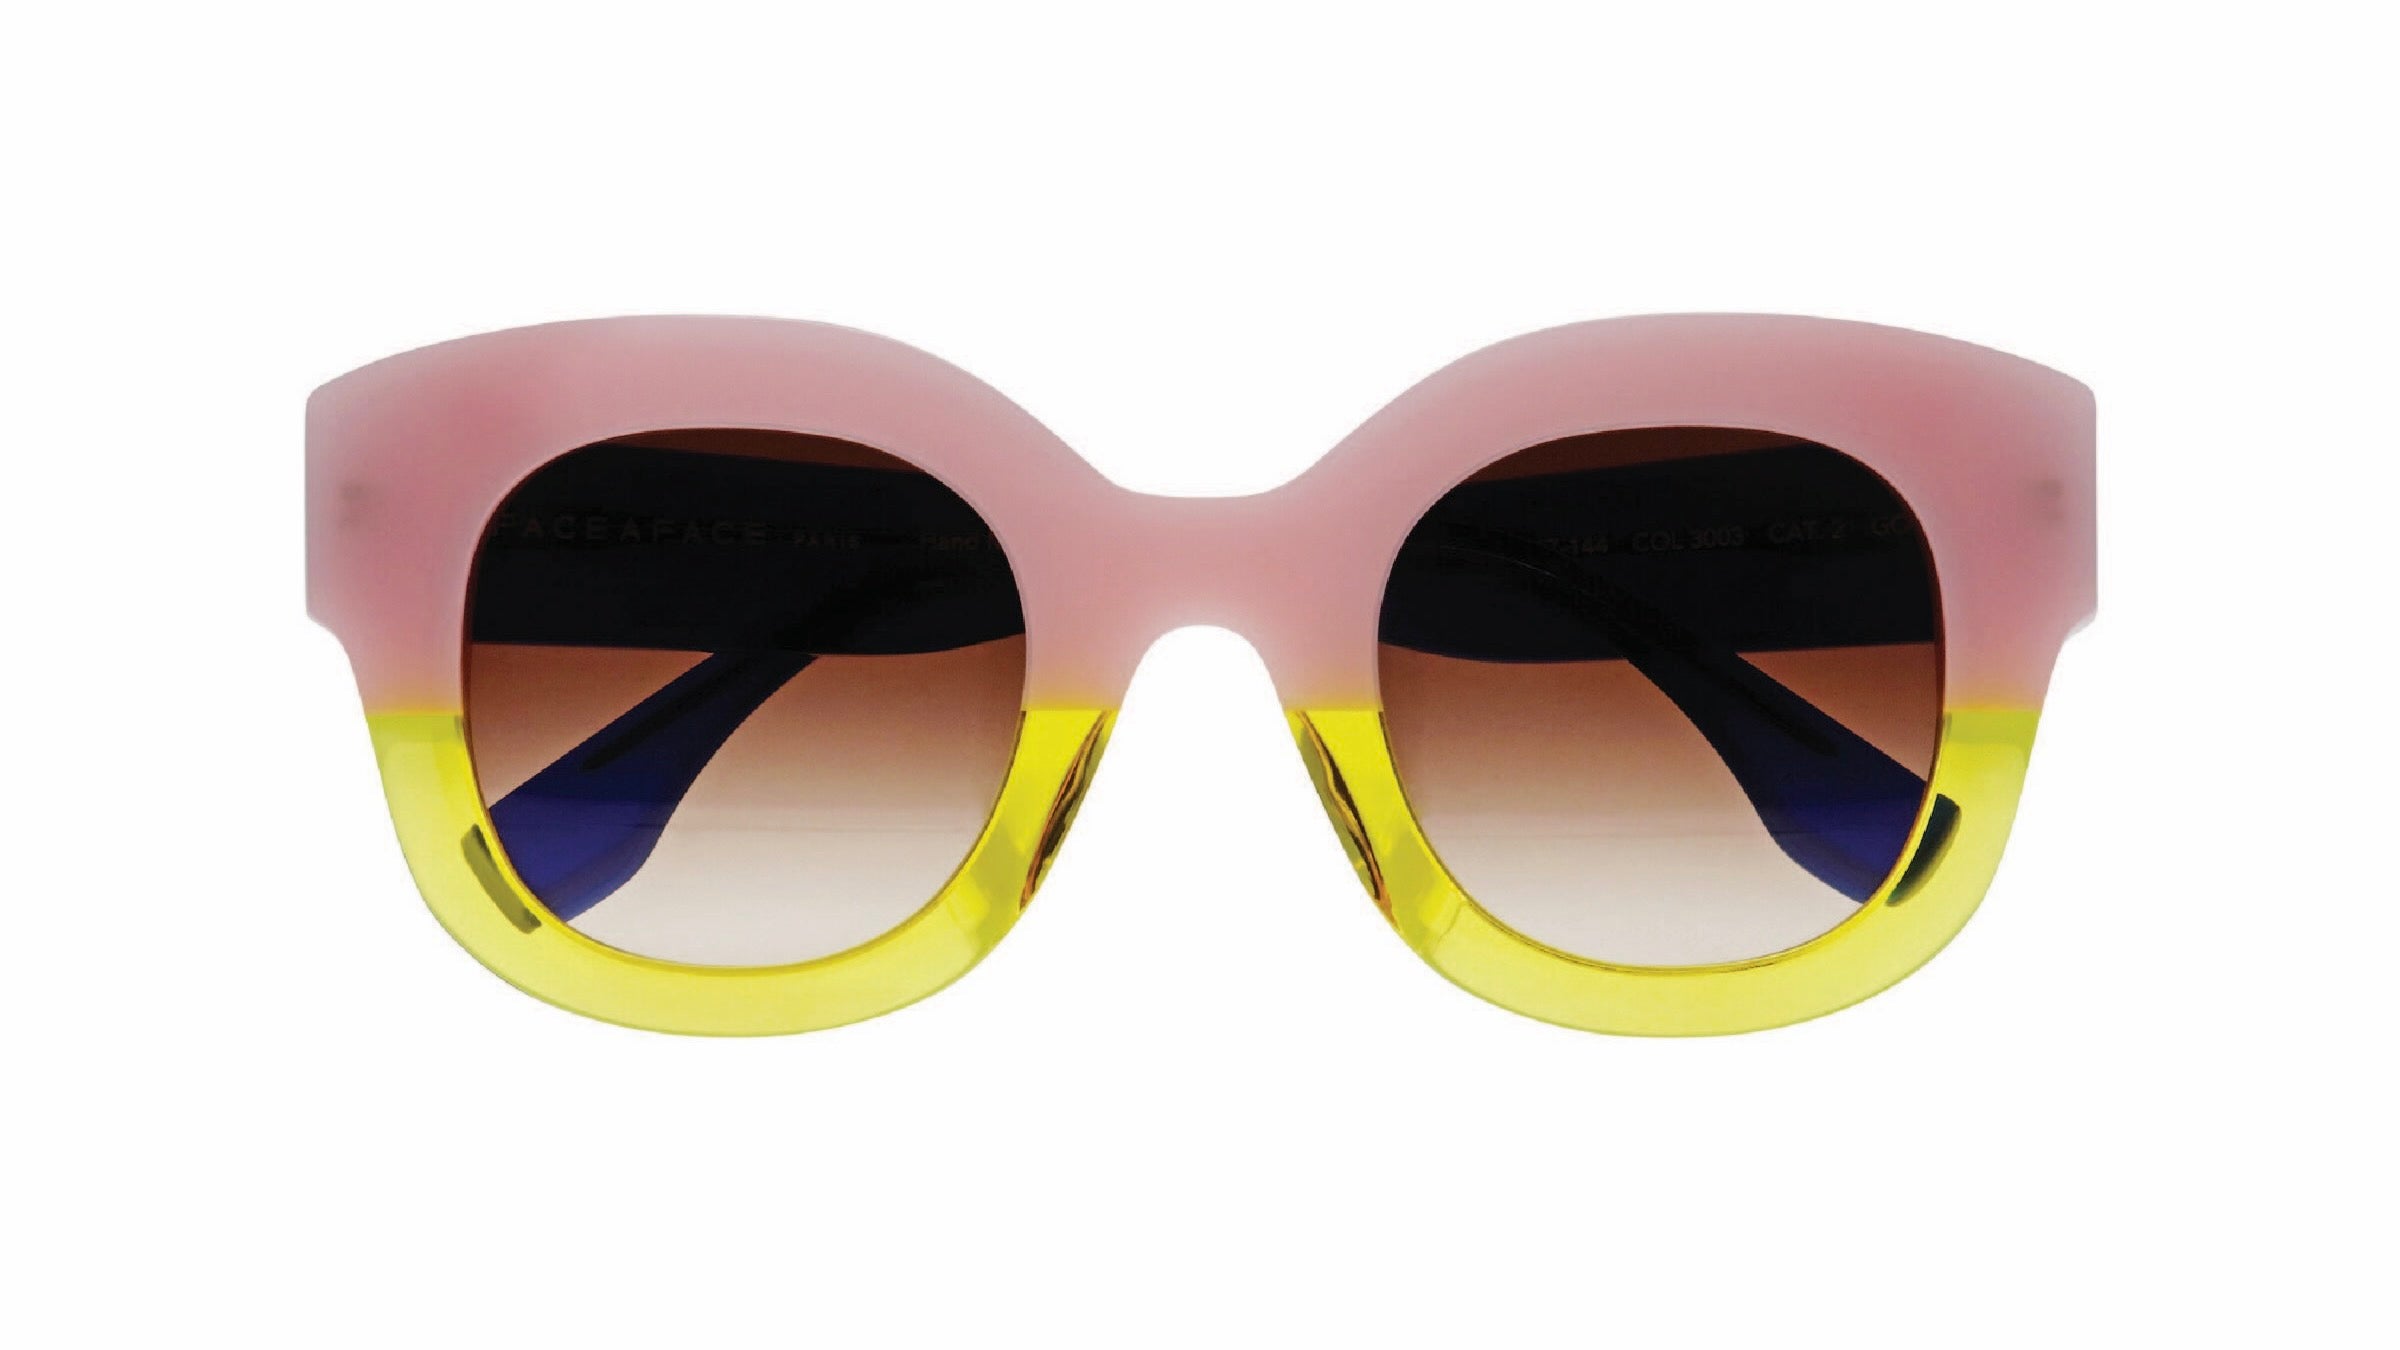 Fordi Napier orm Face A Face Night 2 - 3003 | Sunglasses | Black Optical